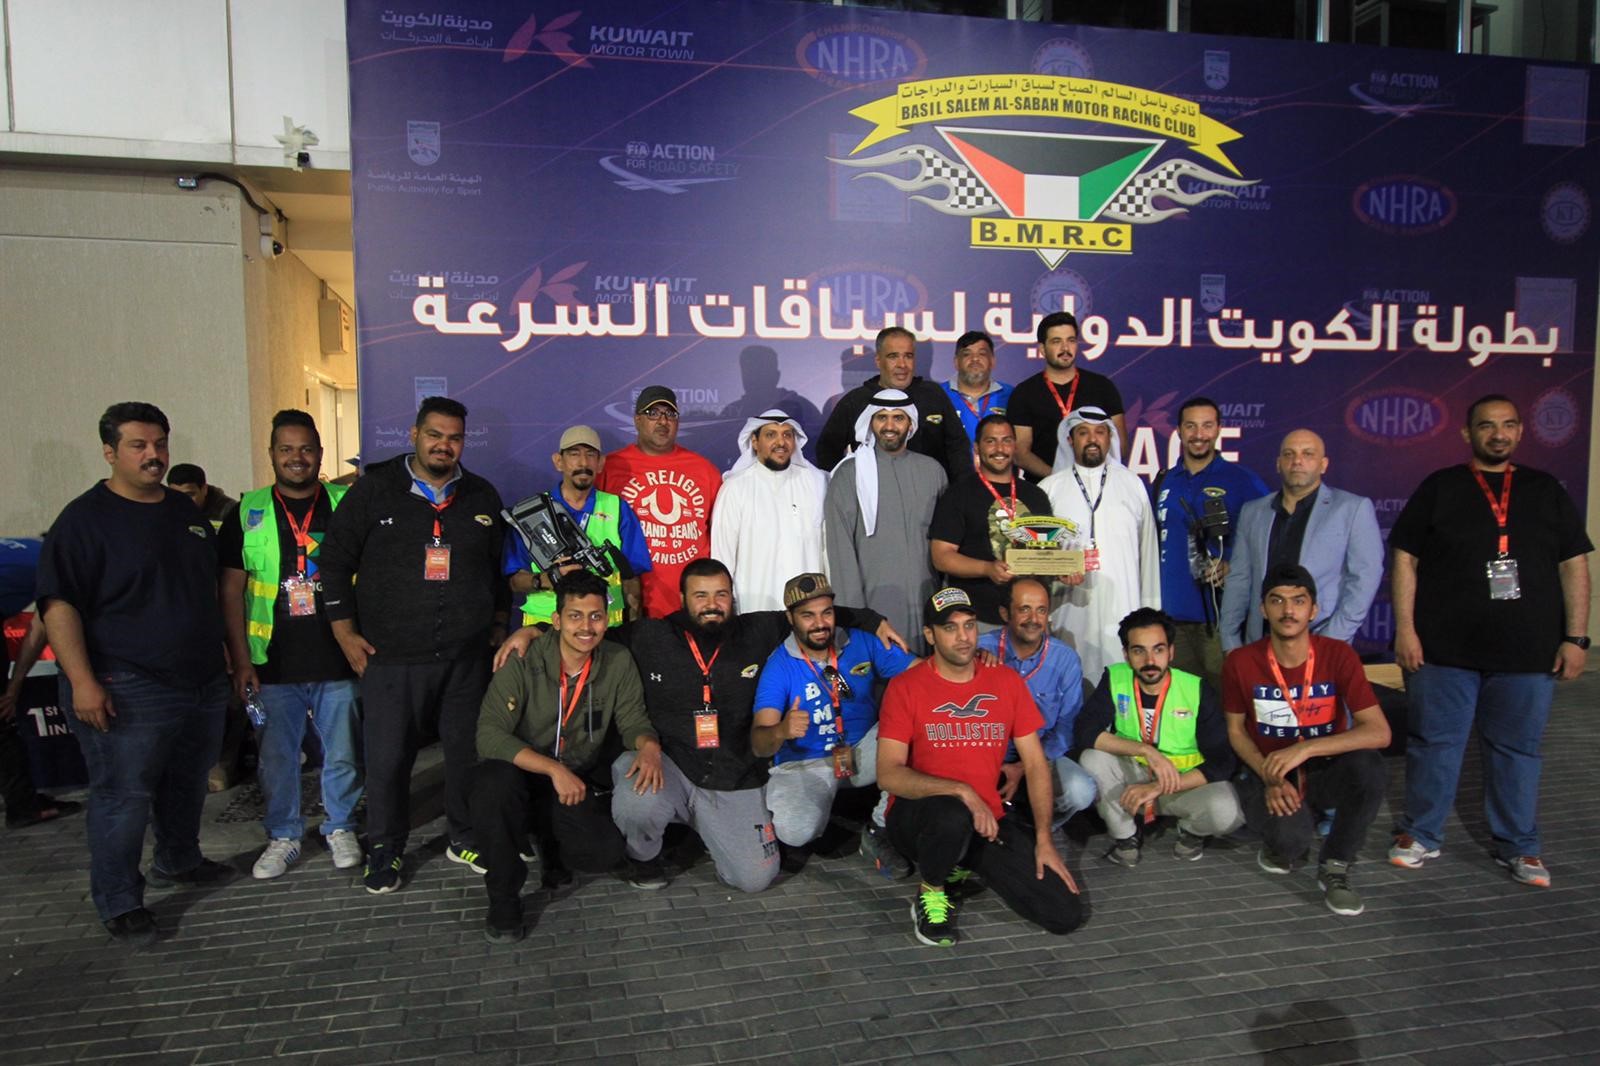 Kuwait International Speed Racing Championship Drag Race, organized by Basel Salem Al-Sabah Motor Racing Club